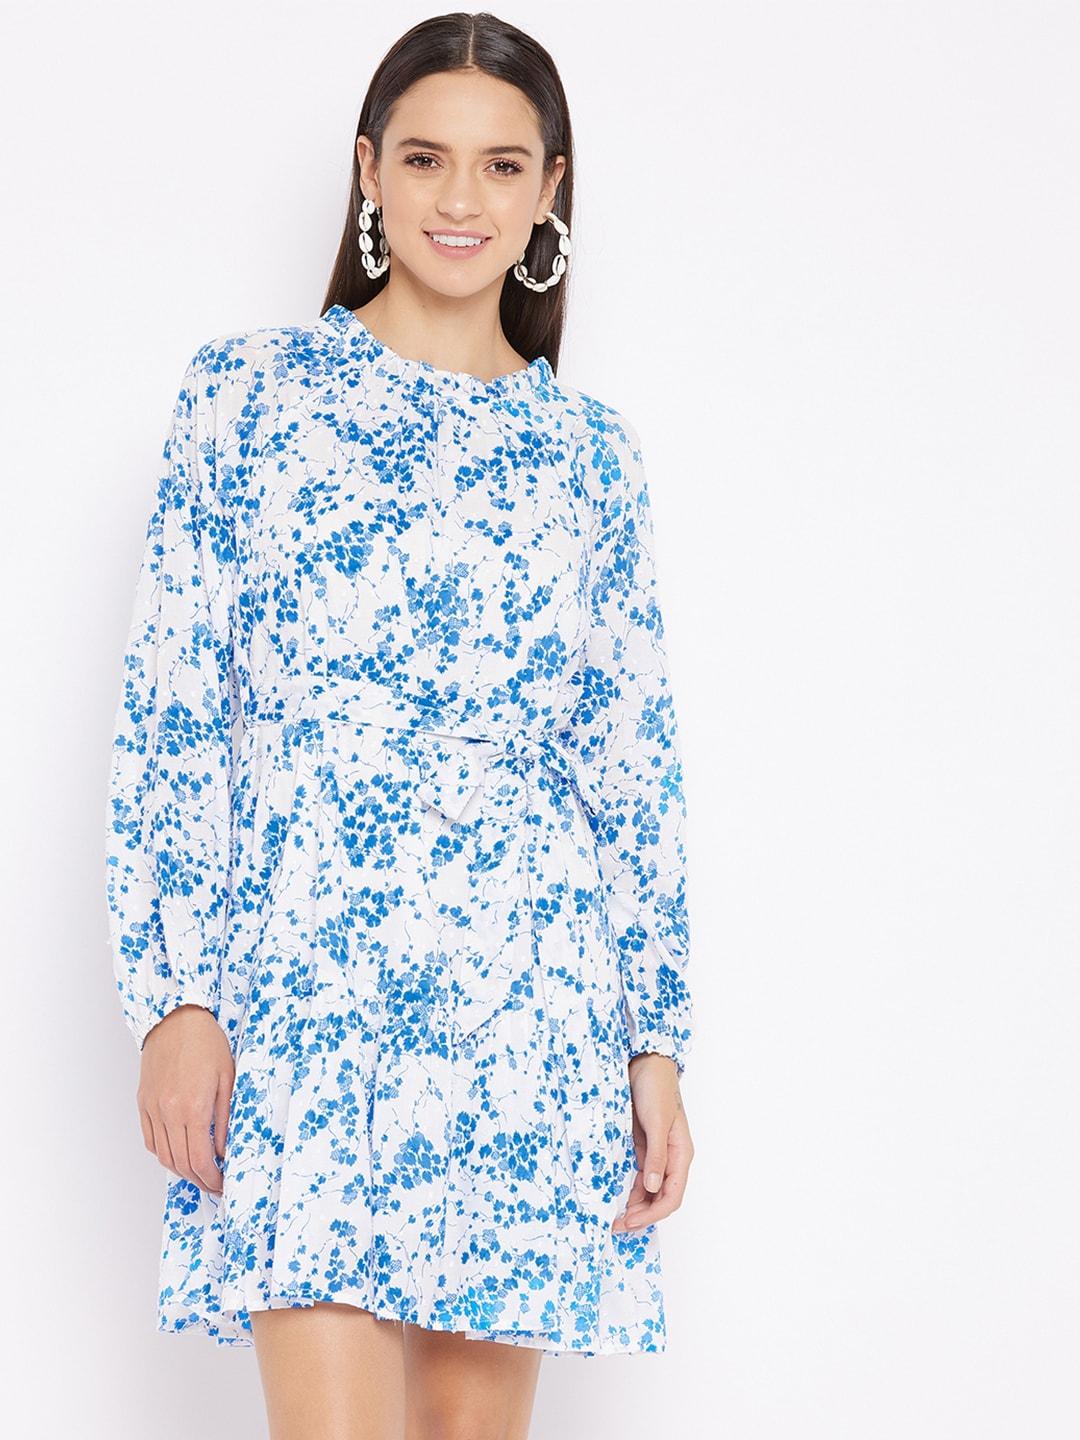 june & harry white & blue floral a-line dress